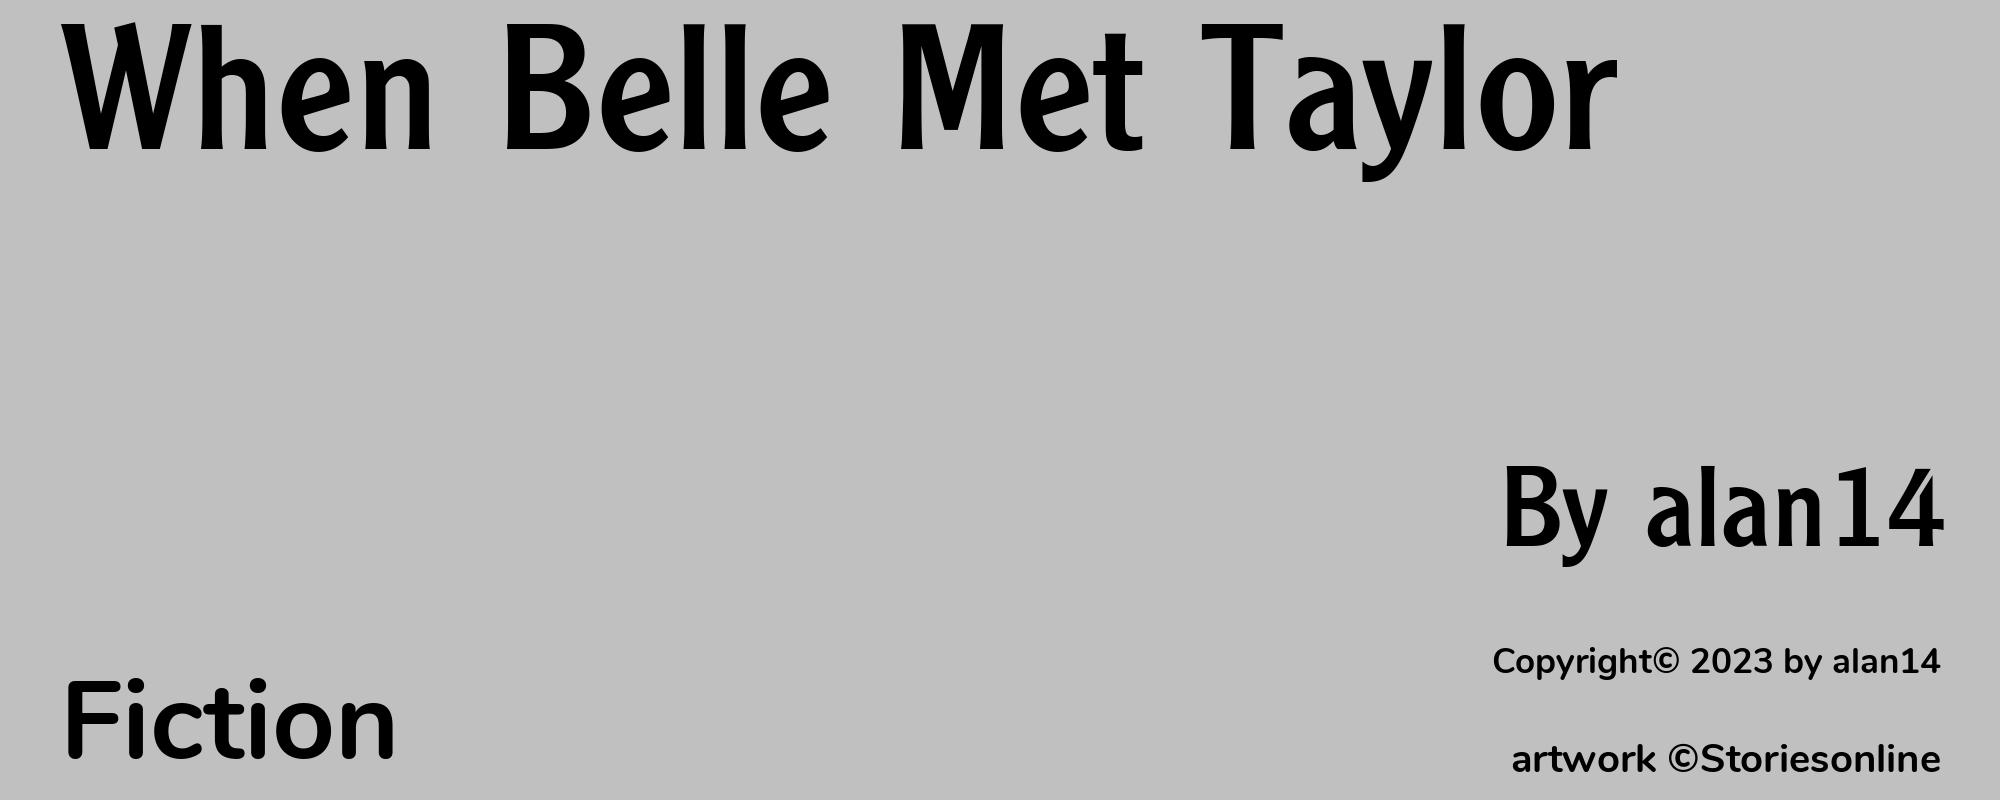 When Belle Met Taylor - Cover